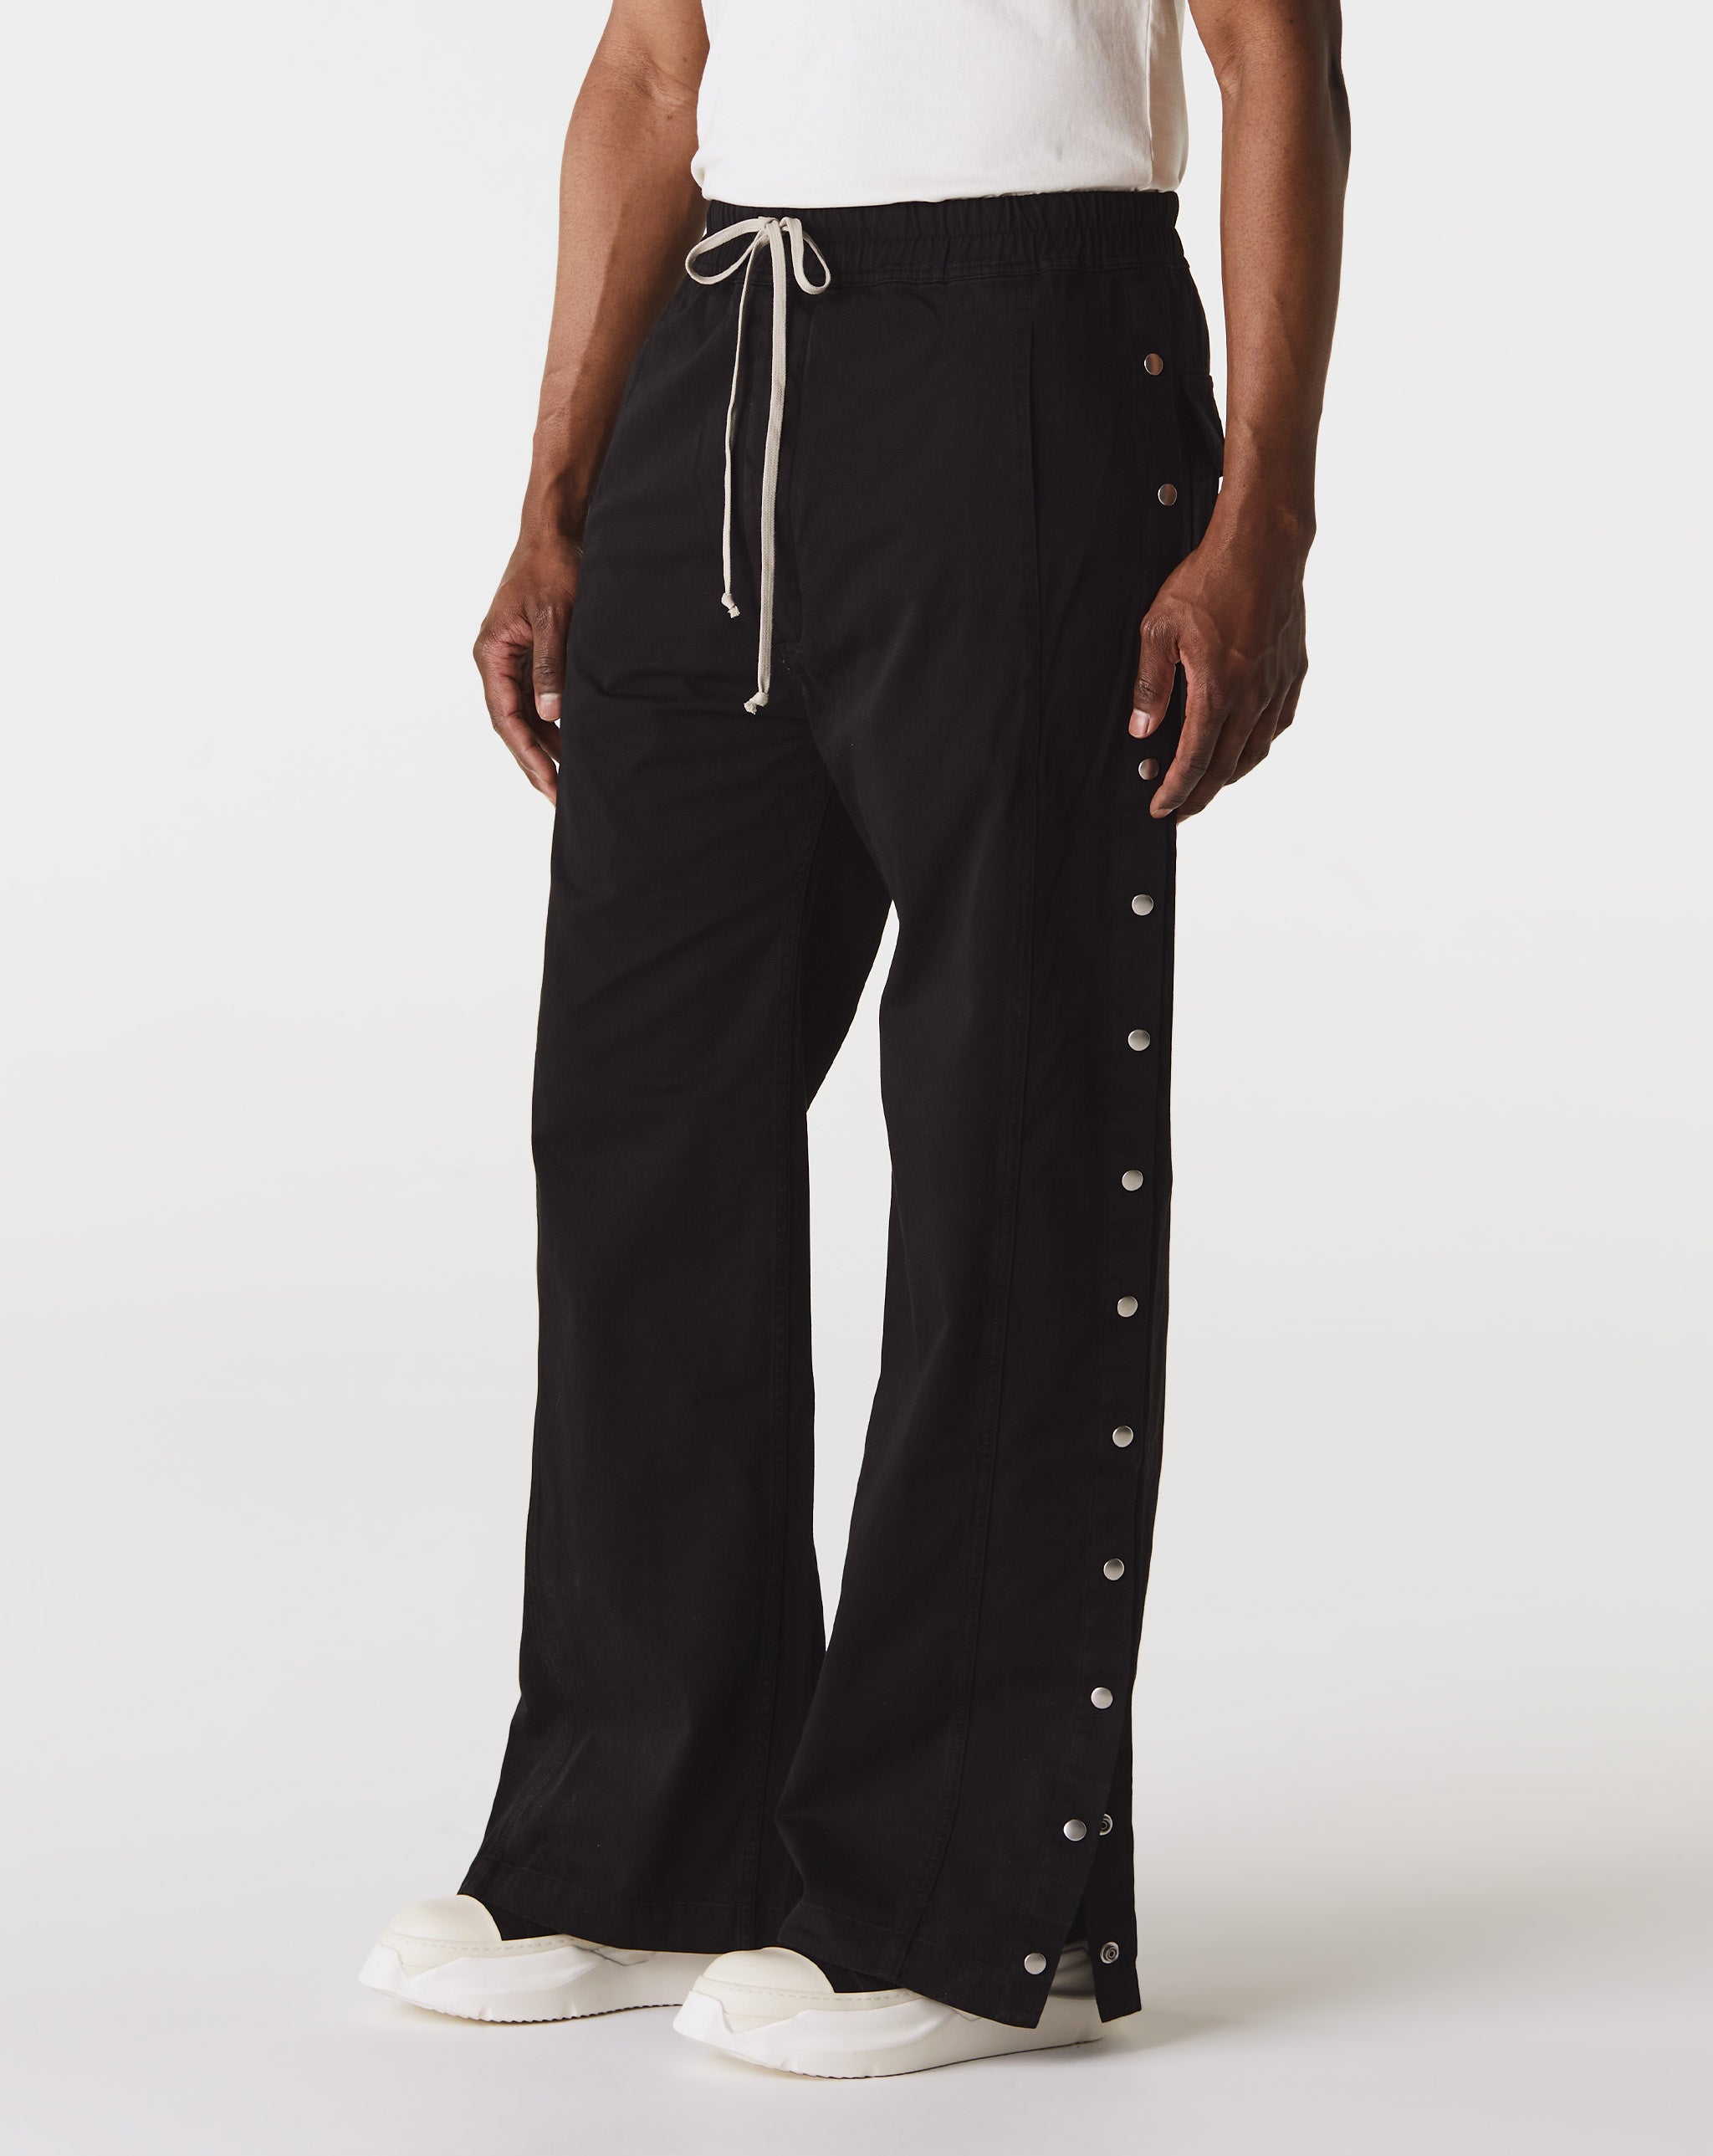 Polacchi Calvin Klein Jeans Lug Mid Laceup Boot Thermo YM0YM00462 Black Bds Pusher Pants  - Cheap Urlfreeze Jordan outlet